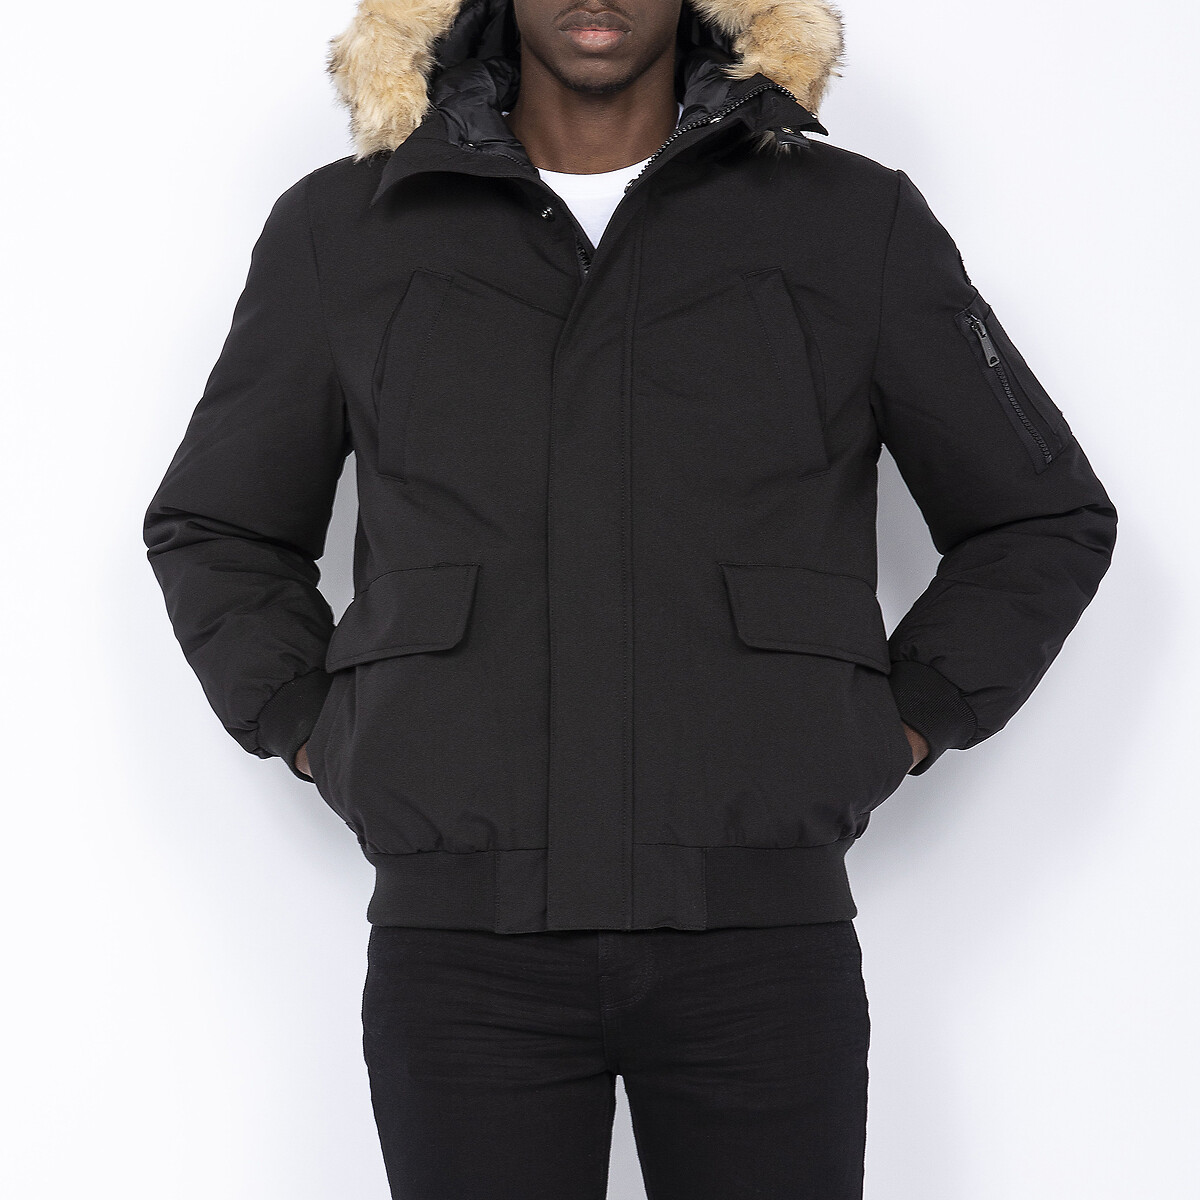 keyburn hooded bomber jacket with zip fastening